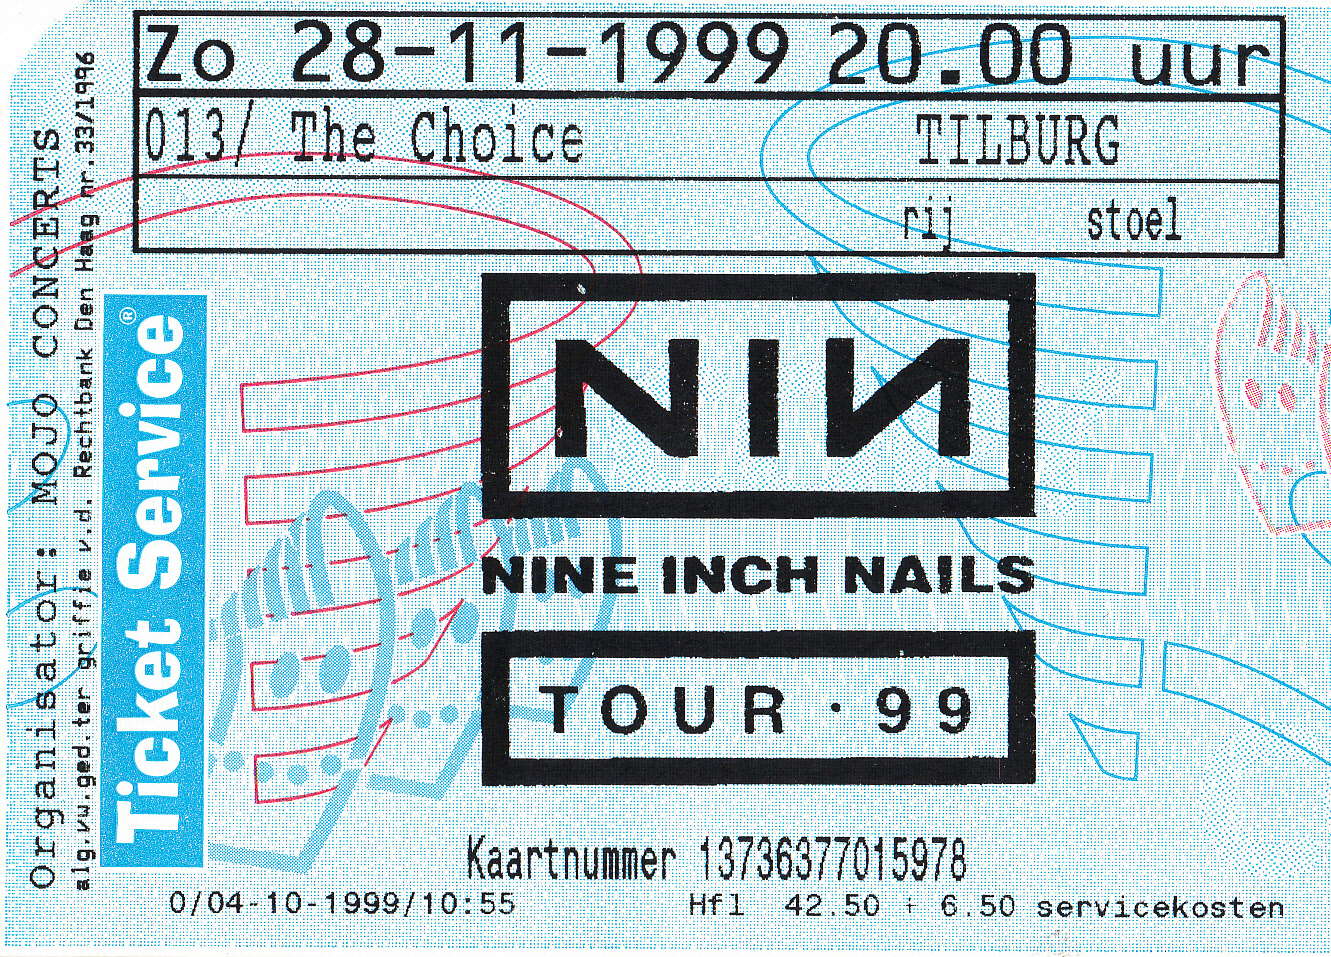 1999/11/28 Ticket